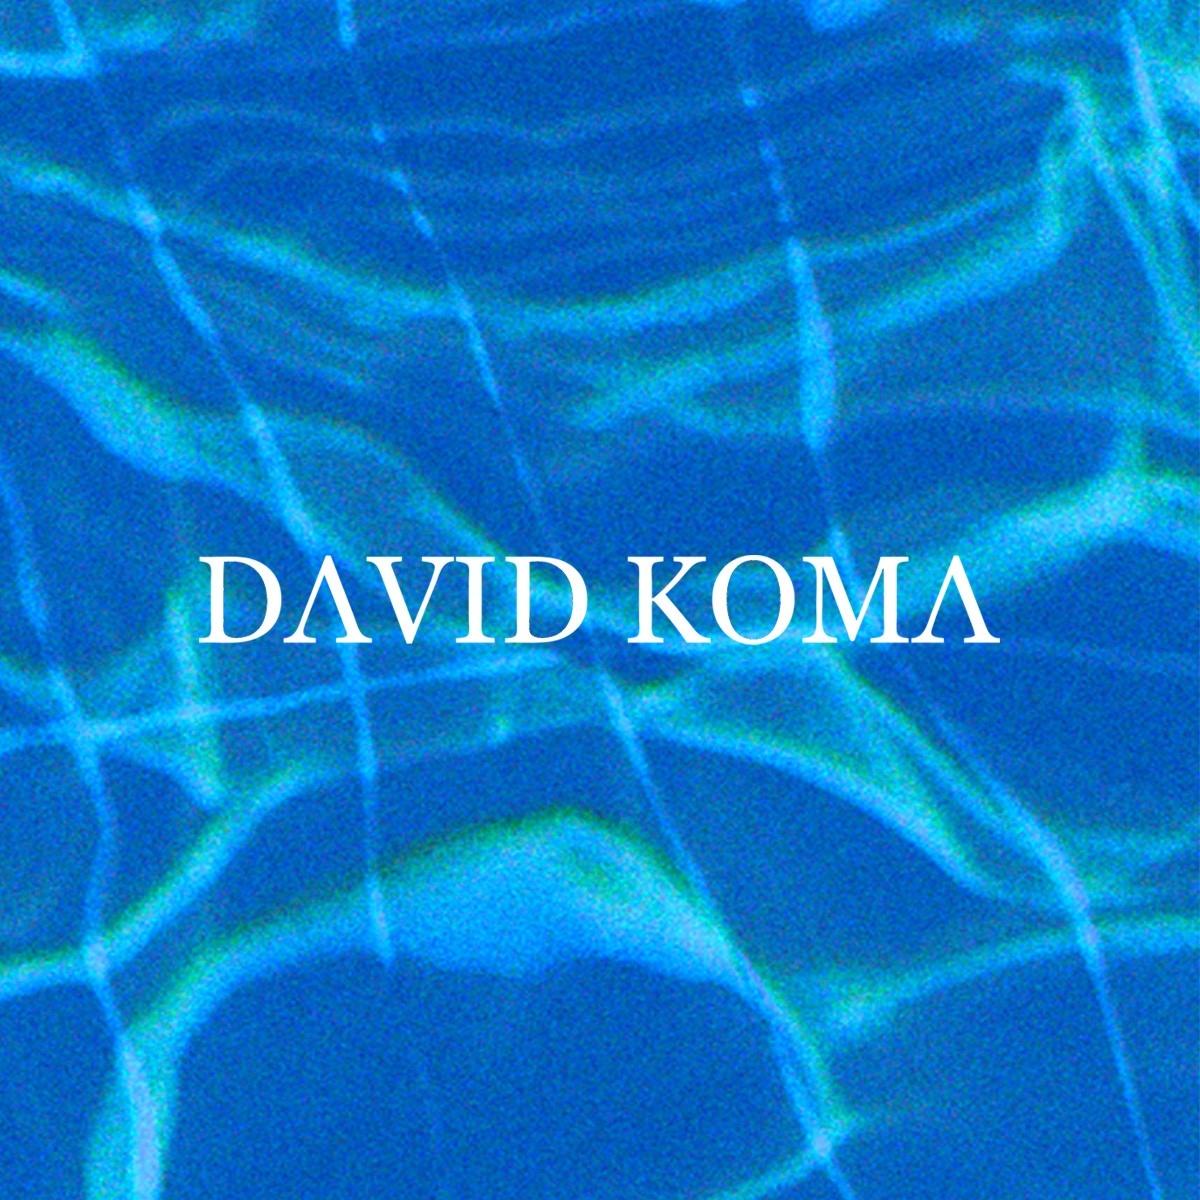 David Koma SS22 Digital Show